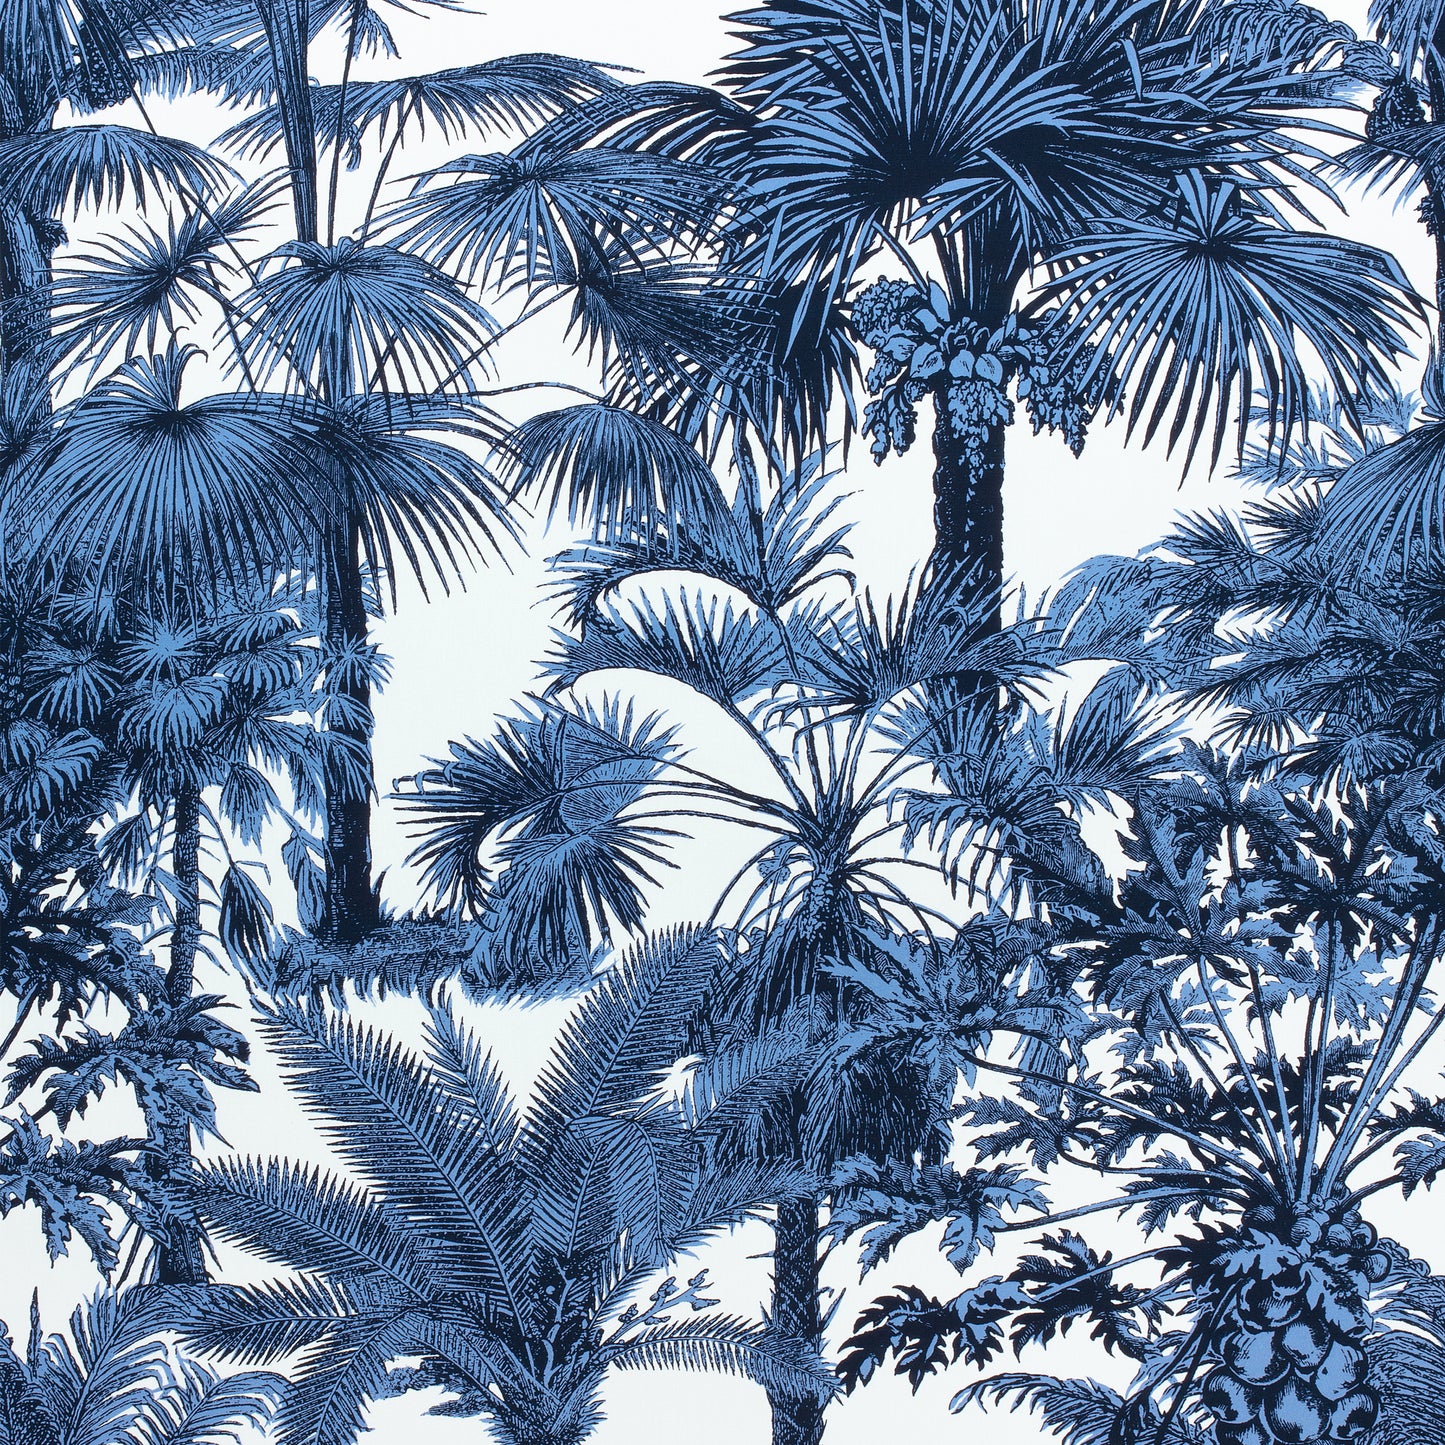 Buy samples of F910100 Palm Botanical Printed Tropics Thibaut Fabrics